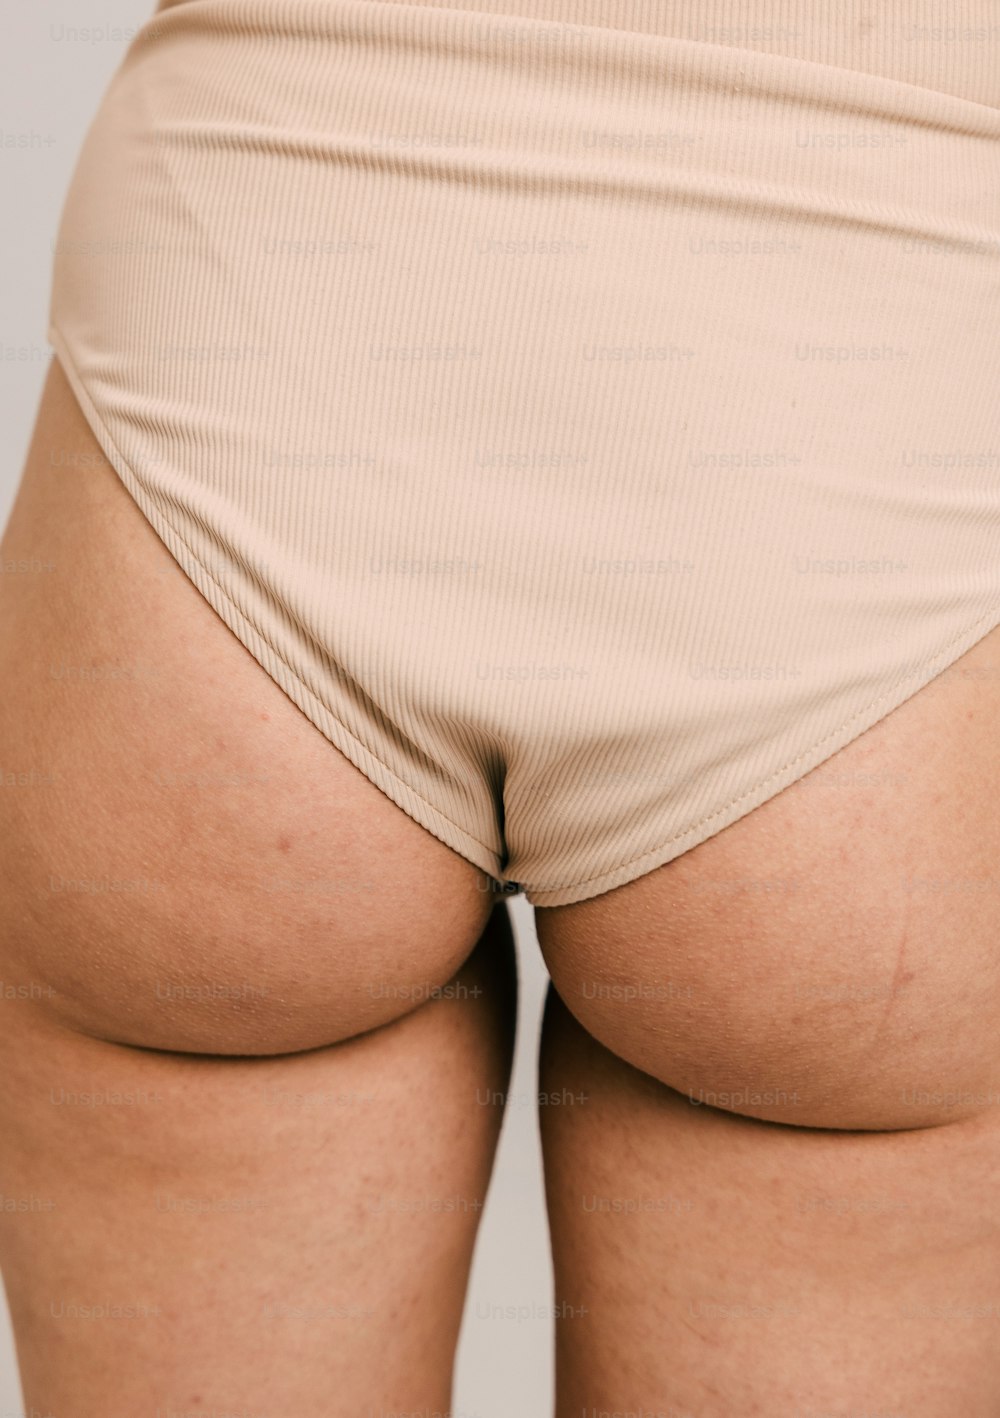 Premium Photo  Woman butt and white underwear in studio